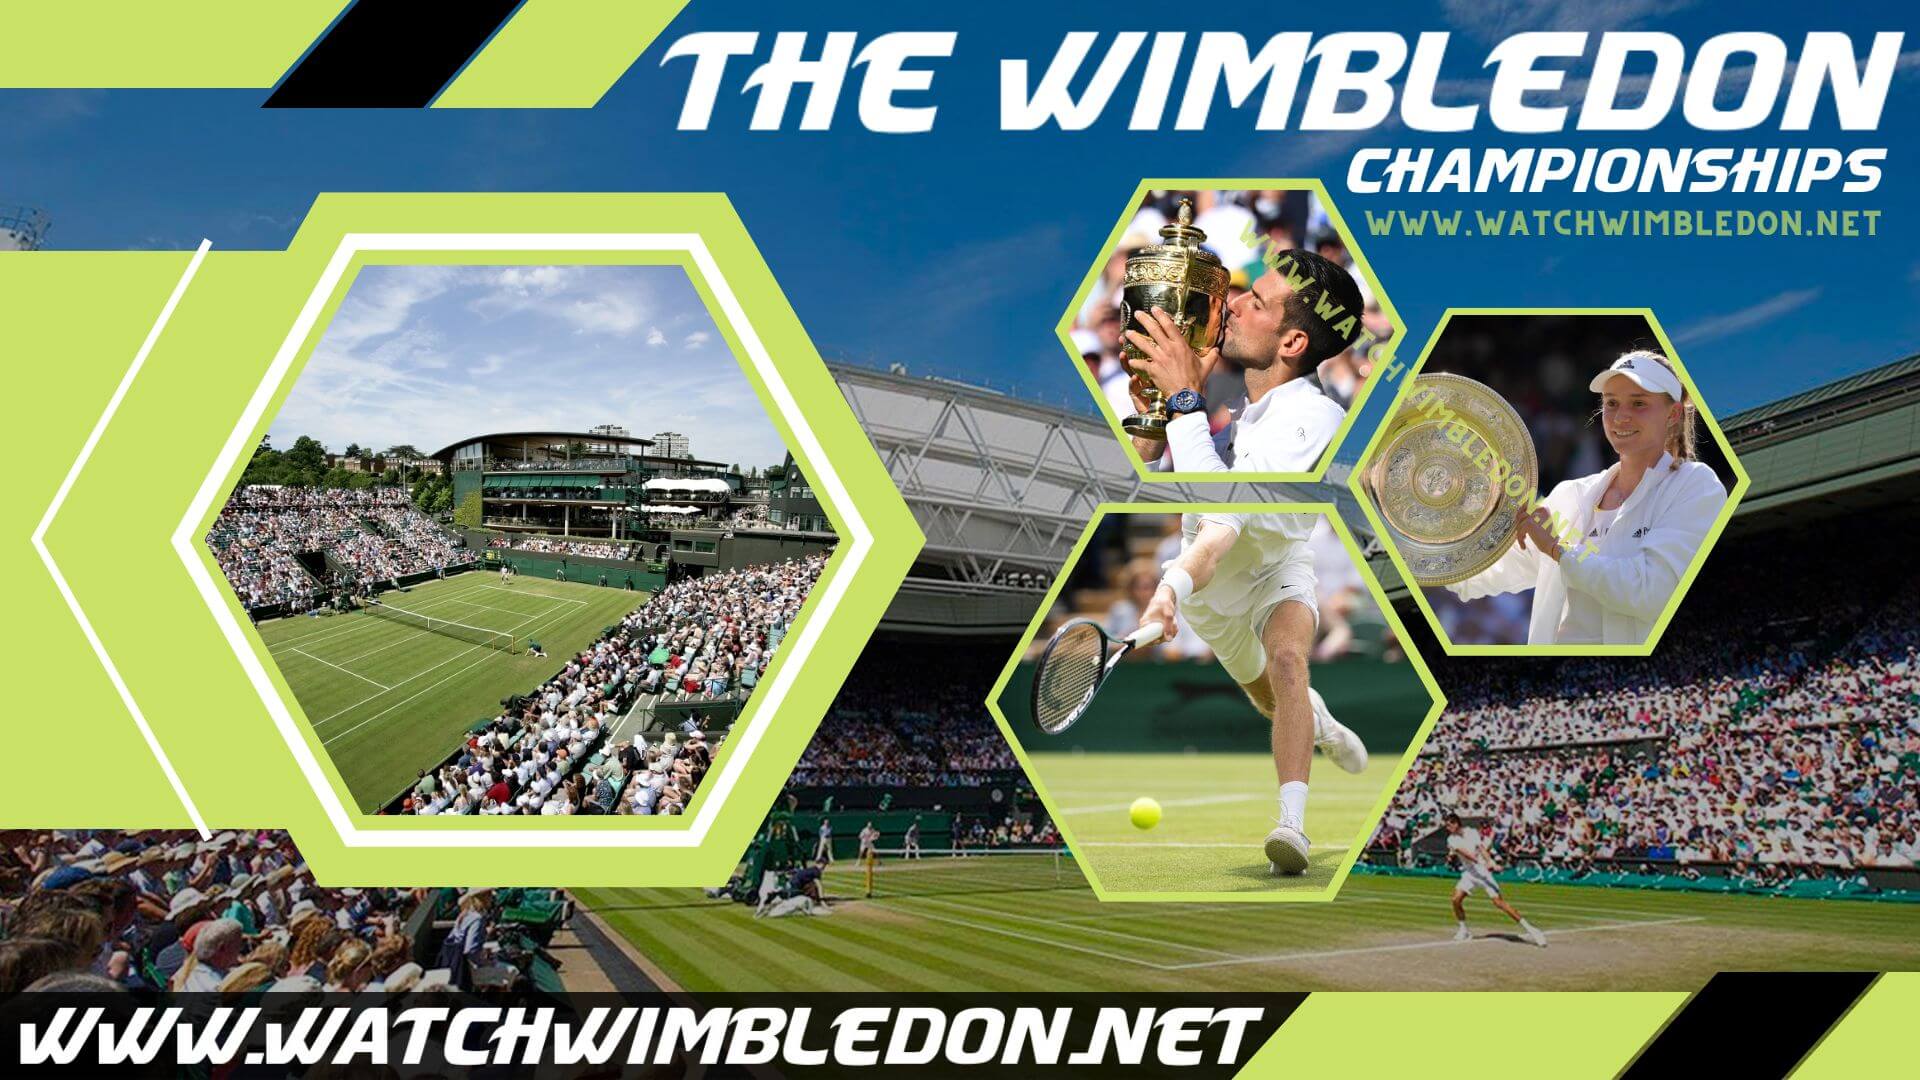 The Championships WimbledonHighlights